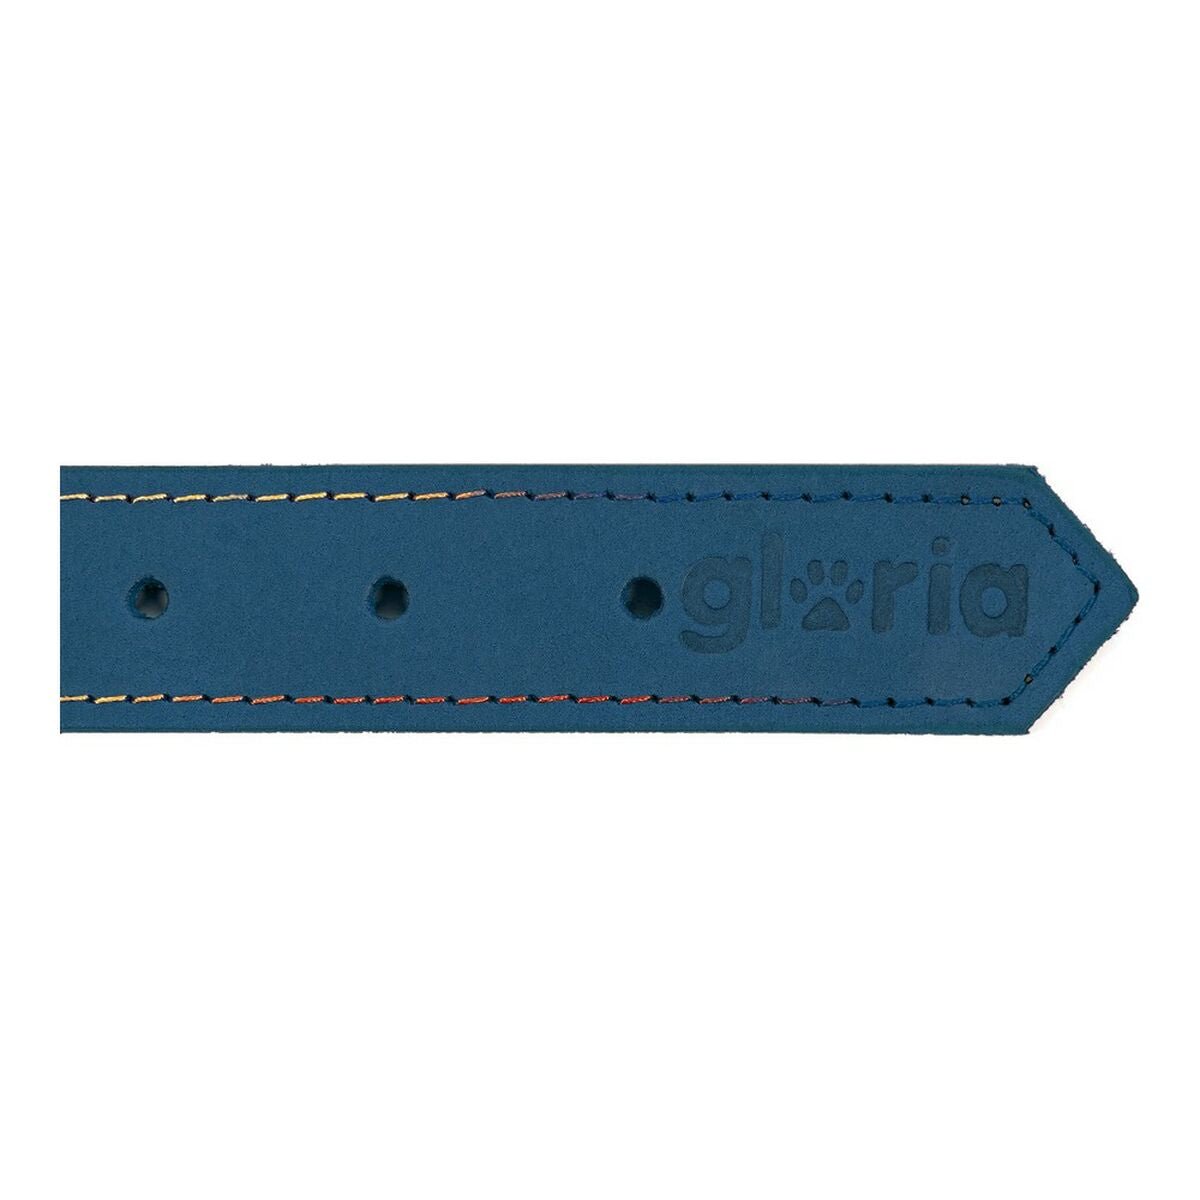 Dog collar leather Gloria Oasis Blue (60 x 3 cm)